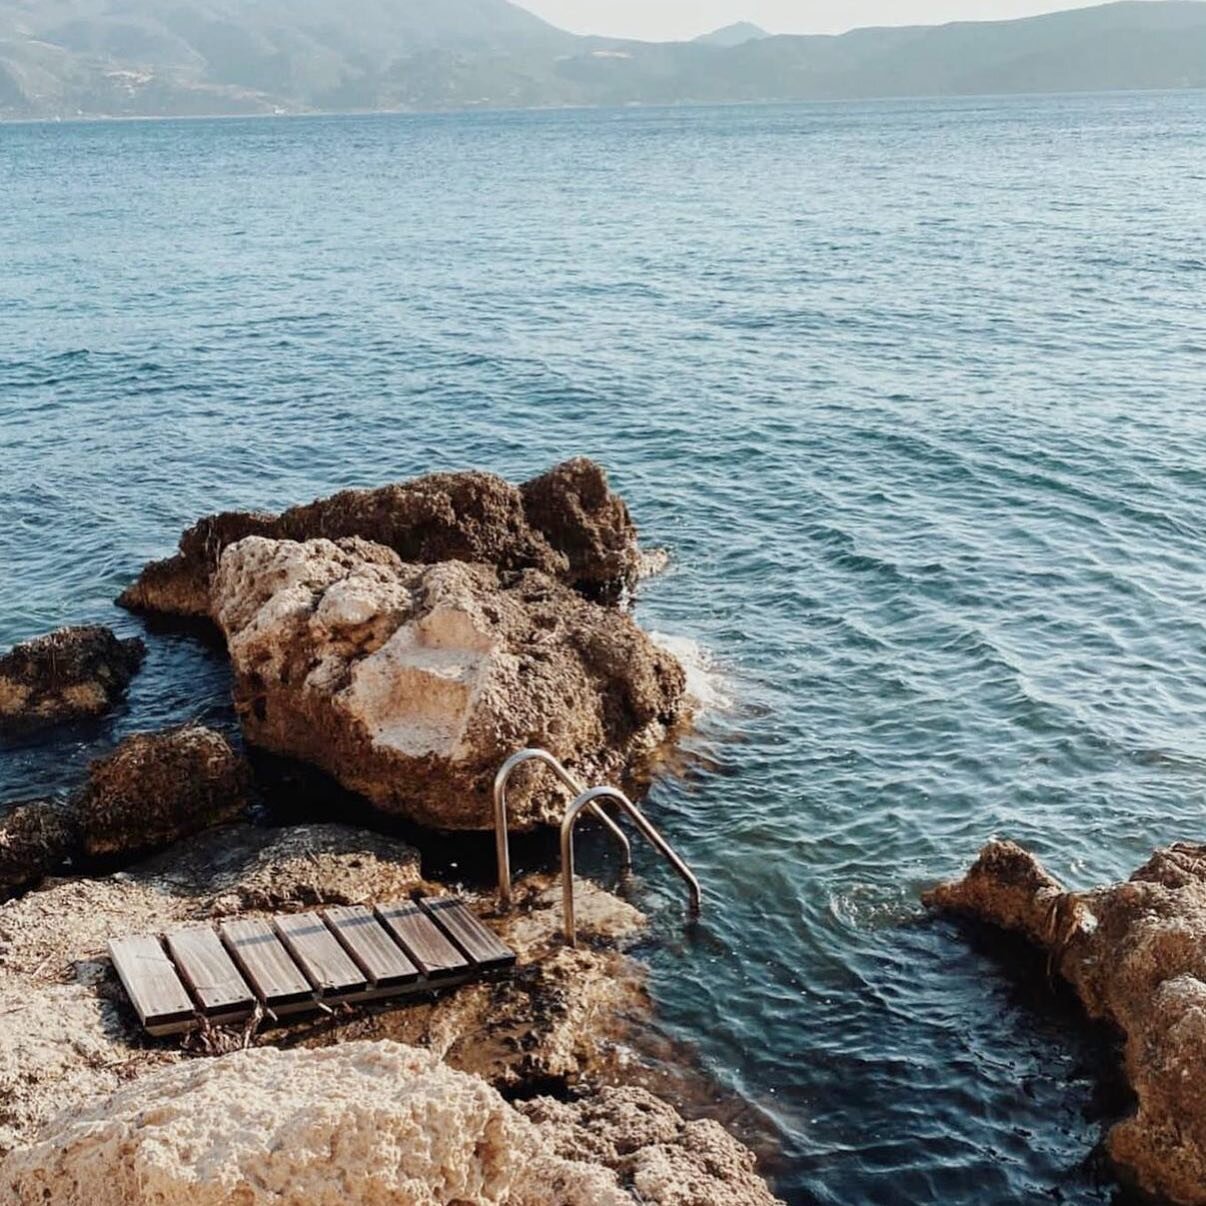 Where I want to Be 🇬🇷 @skinopilodge 

#greeceislands #greeceistheword #greektravel #greekislands #tripdesign #forthecurious #wanderlust #tripplanner #luxurytravel #travelunplugged